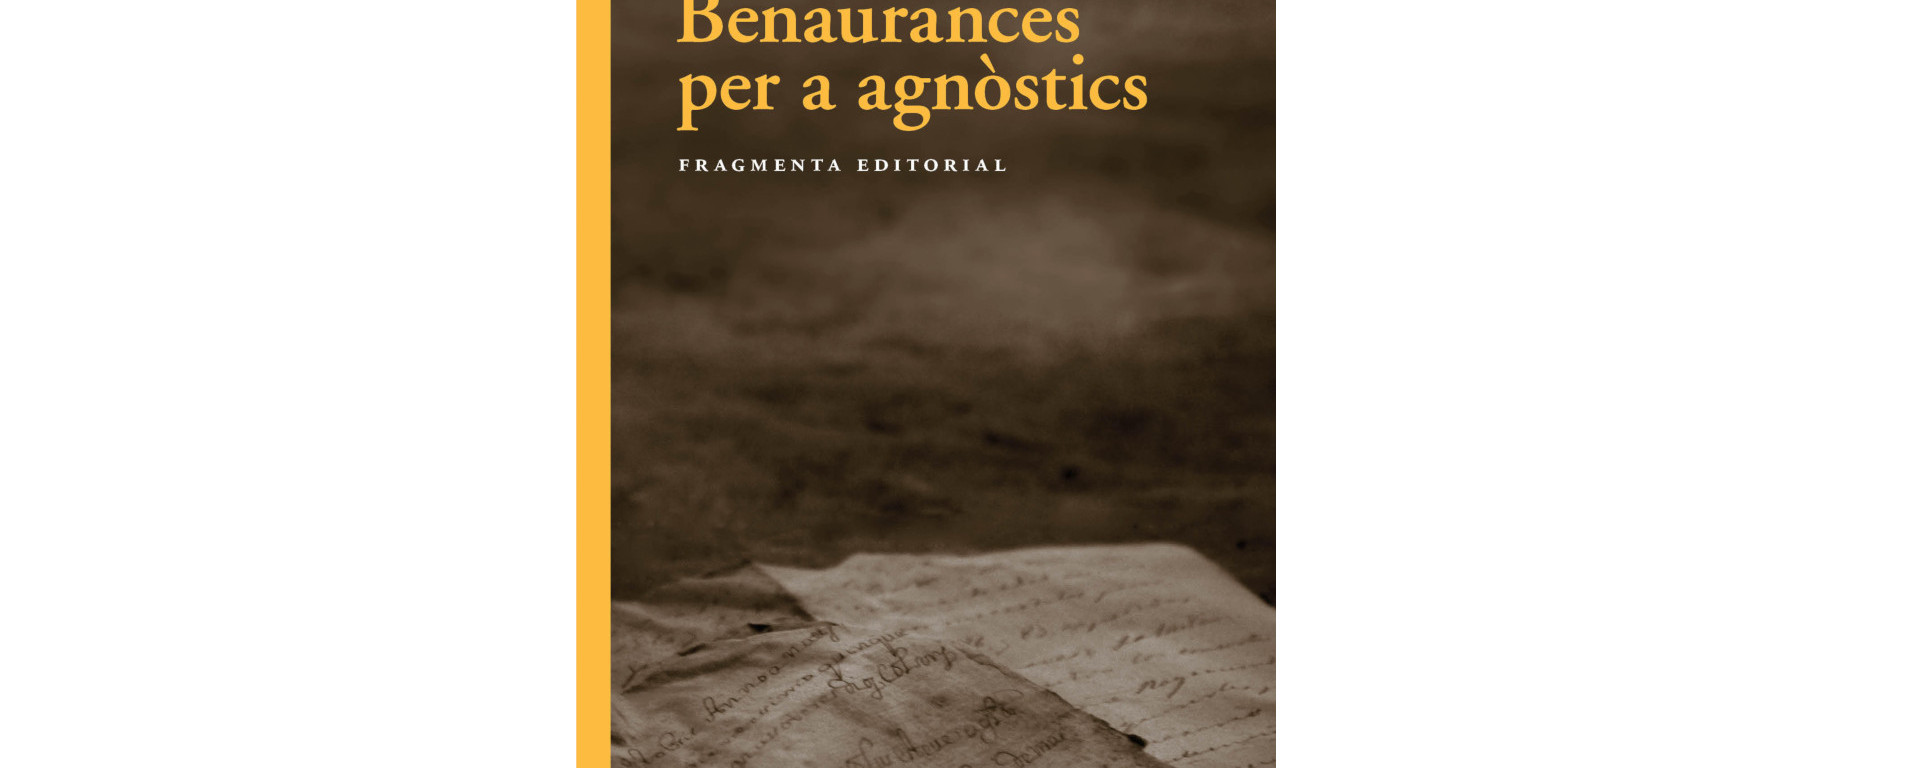 benaurances-per-a-agnostics